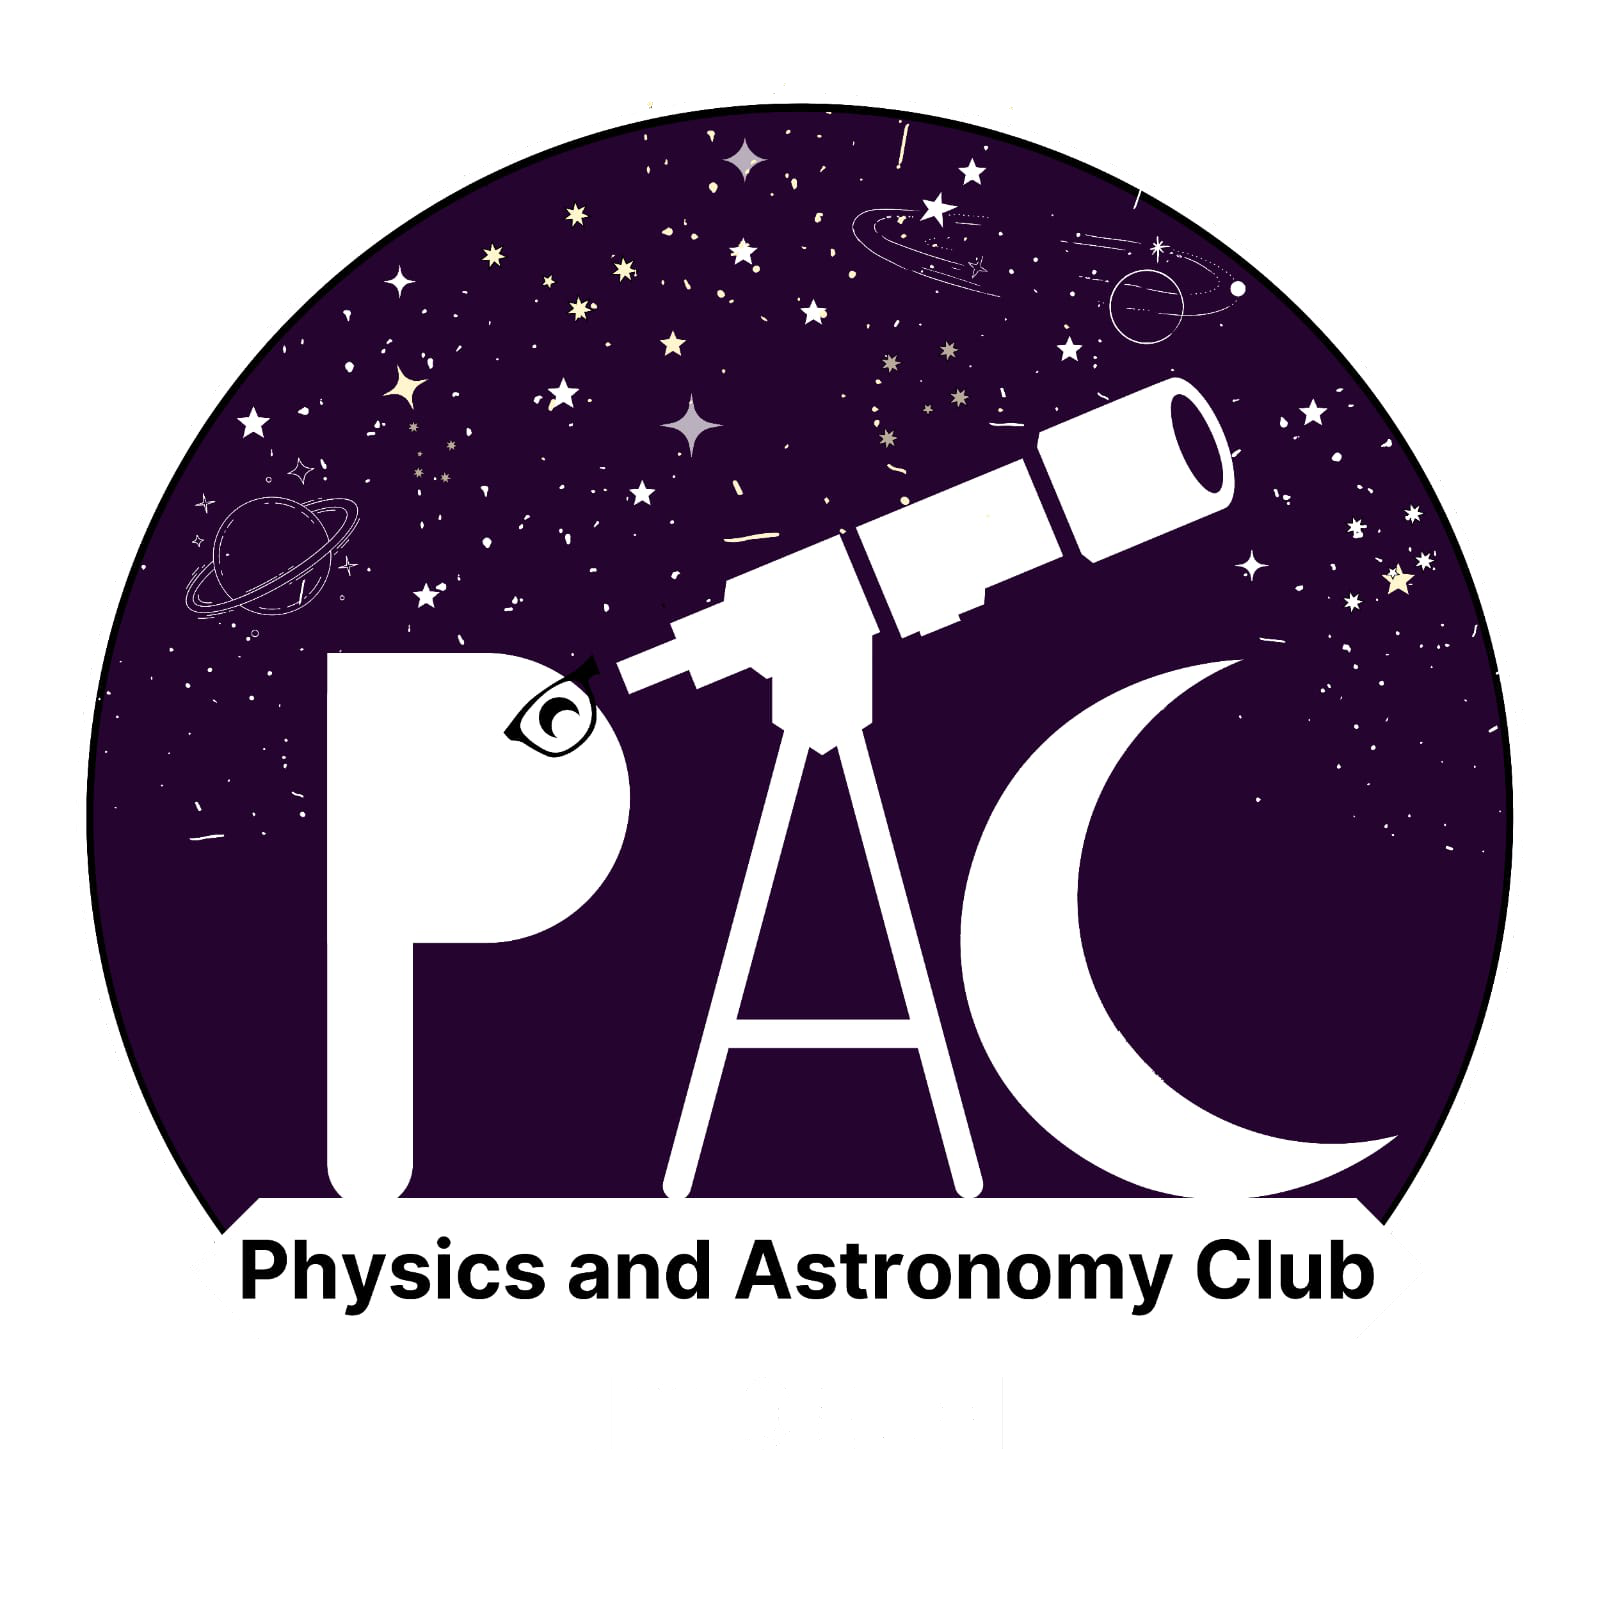 PHYSICS & ASTRONOMY CLUB